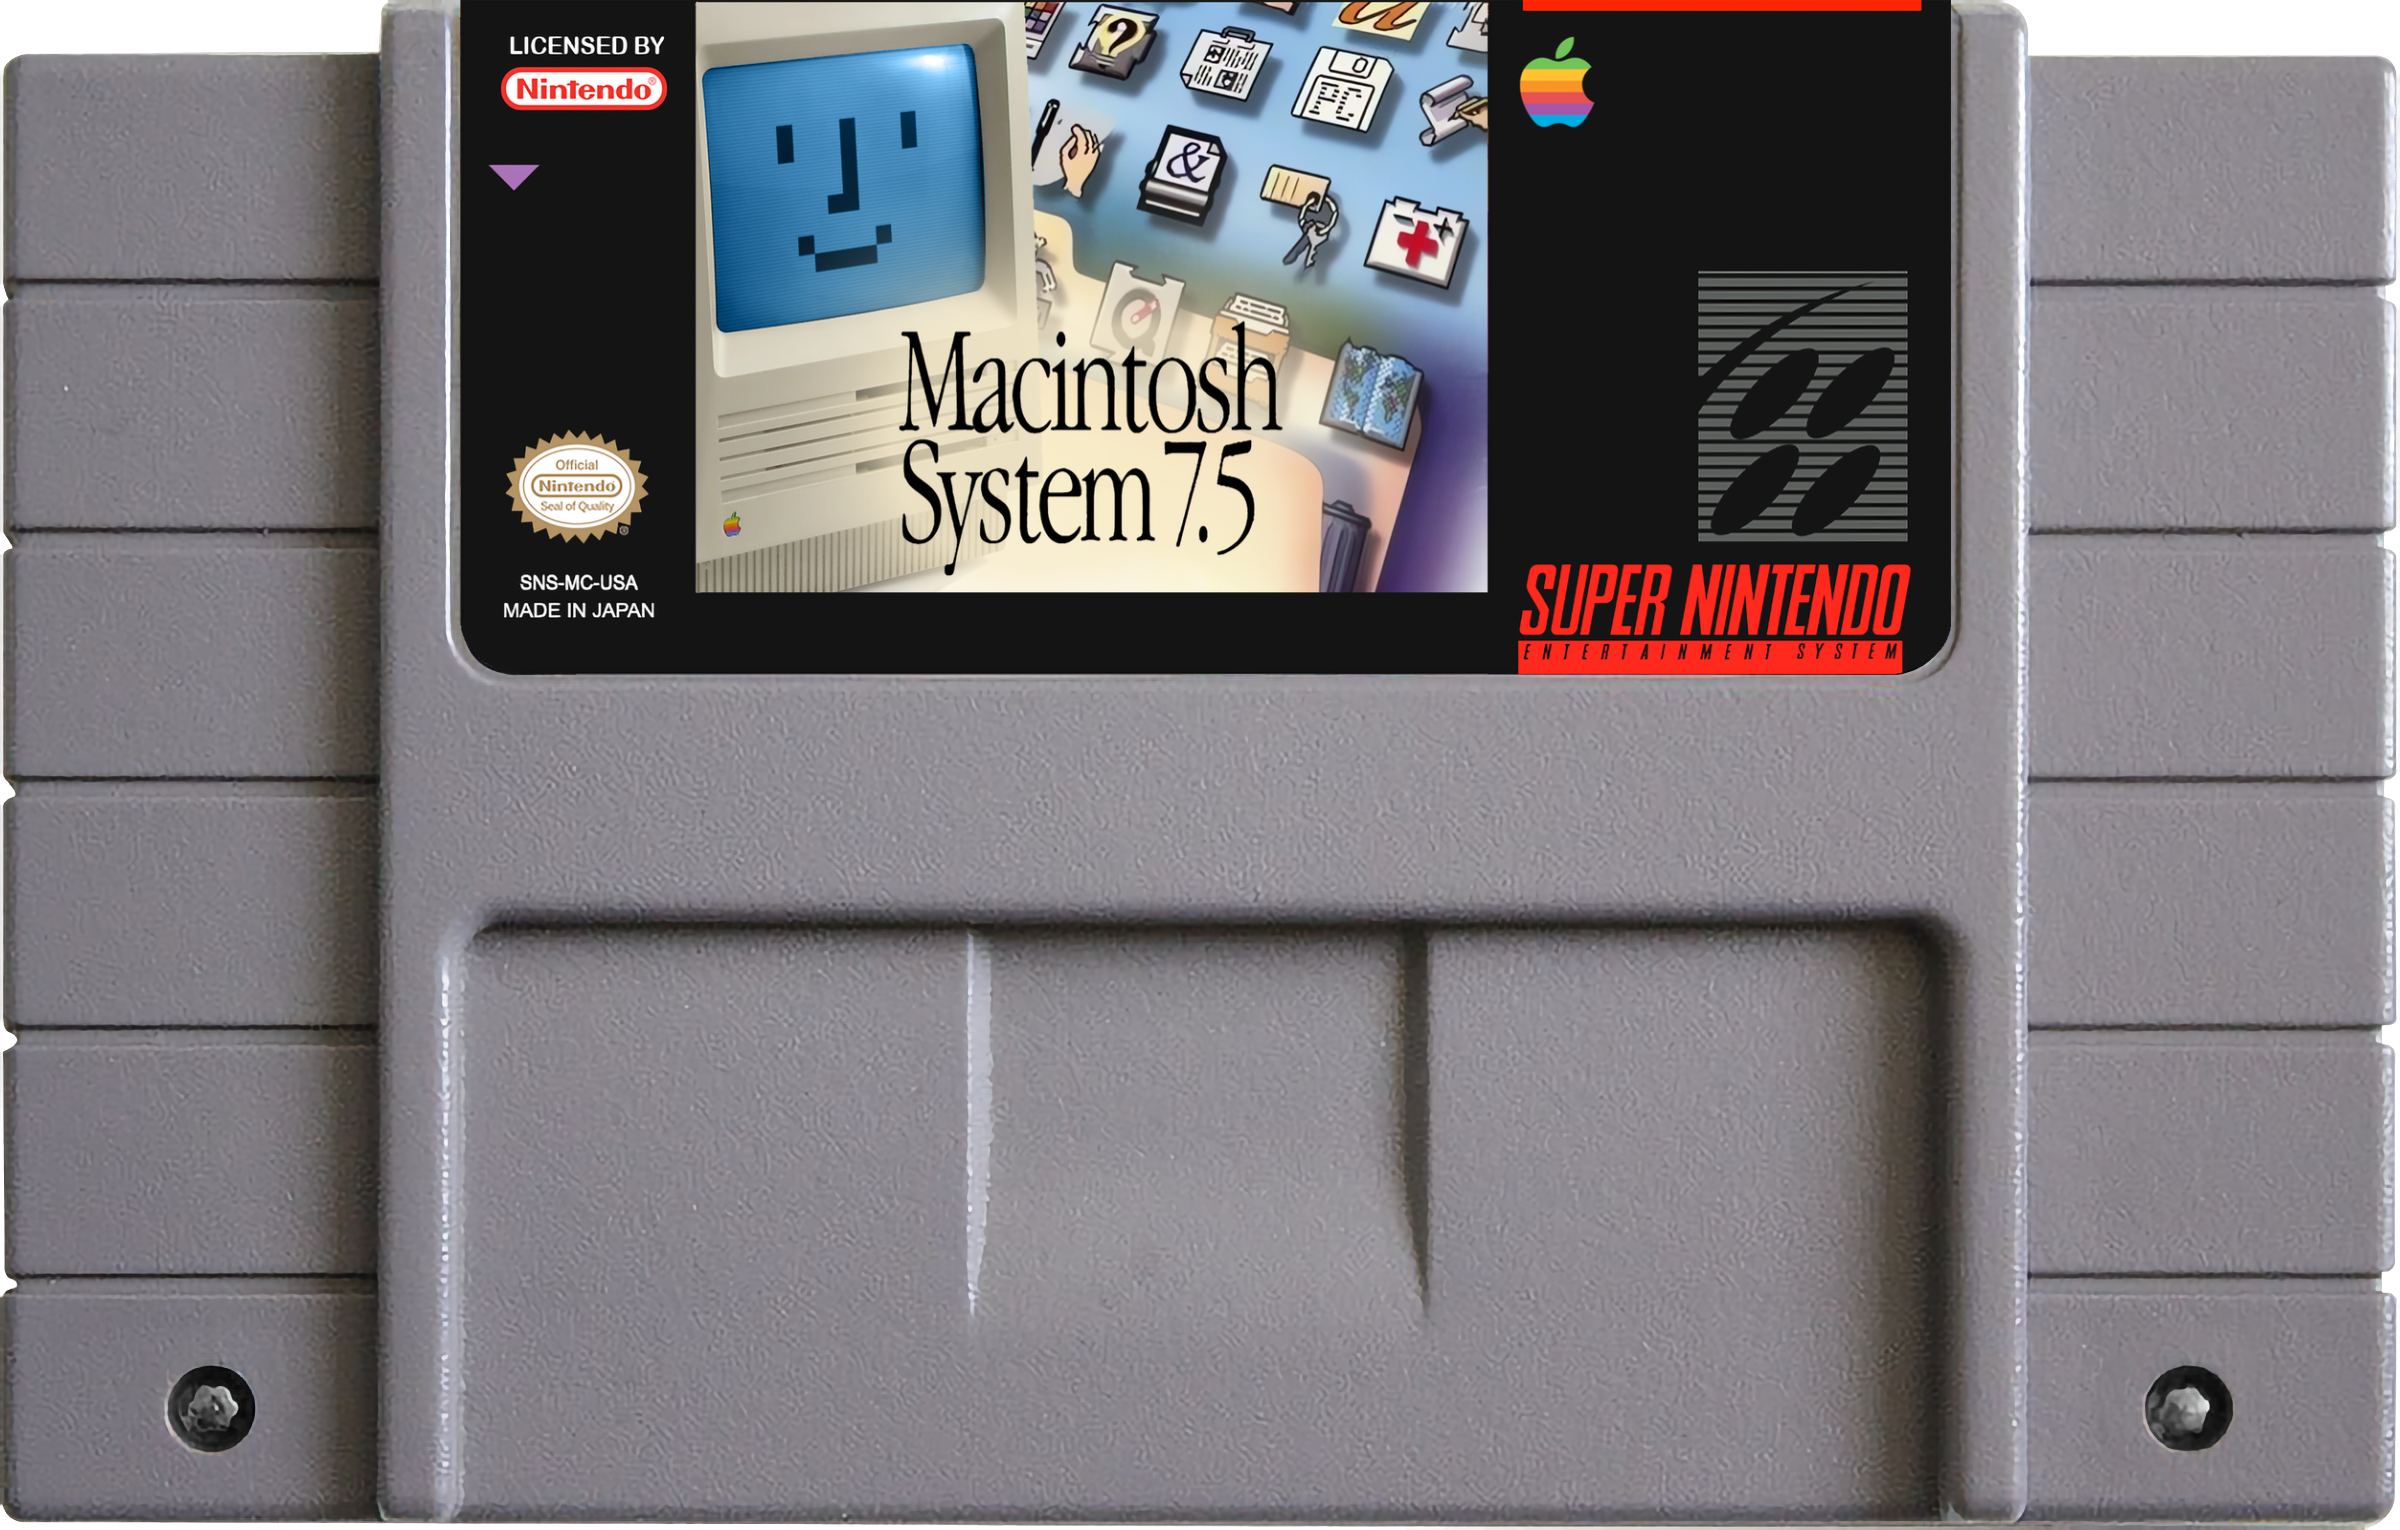 Macintosh System 7 for the Nintendo Entertainment System cartridge